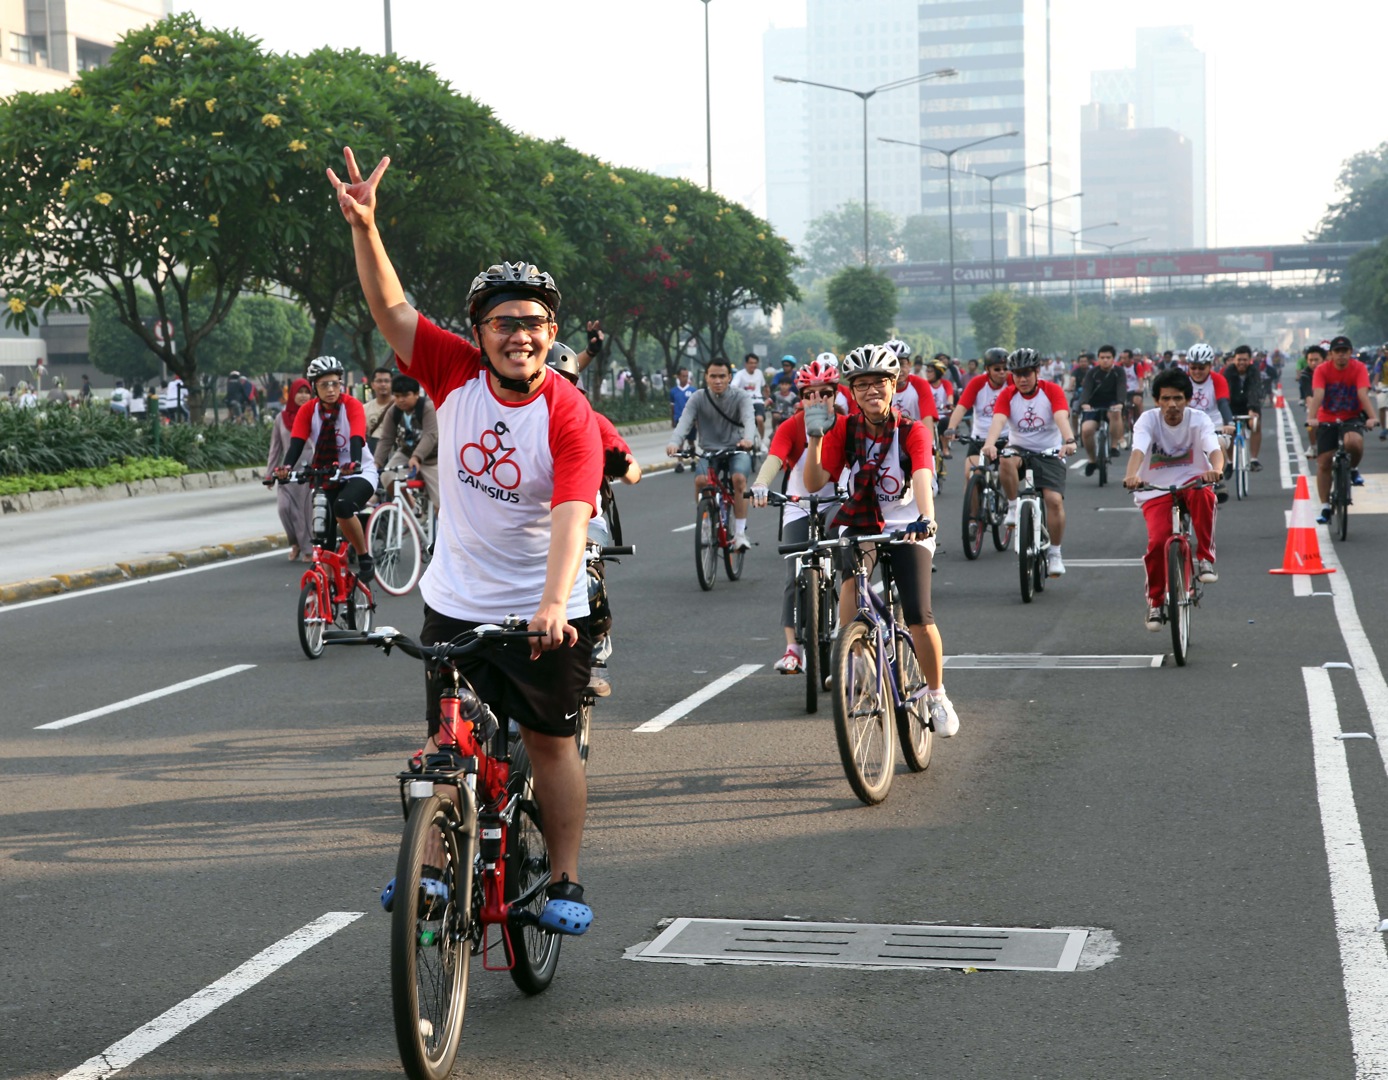 Sekitar 500 peserta dari berbagai kalangan dan komunitas ikut meramaikan kegiatan sepeda santai (fun bike) yang diadakan Lembaga Kantor Berita Nasional (LKBN) Antara di Jakarta, Minggu pagi.